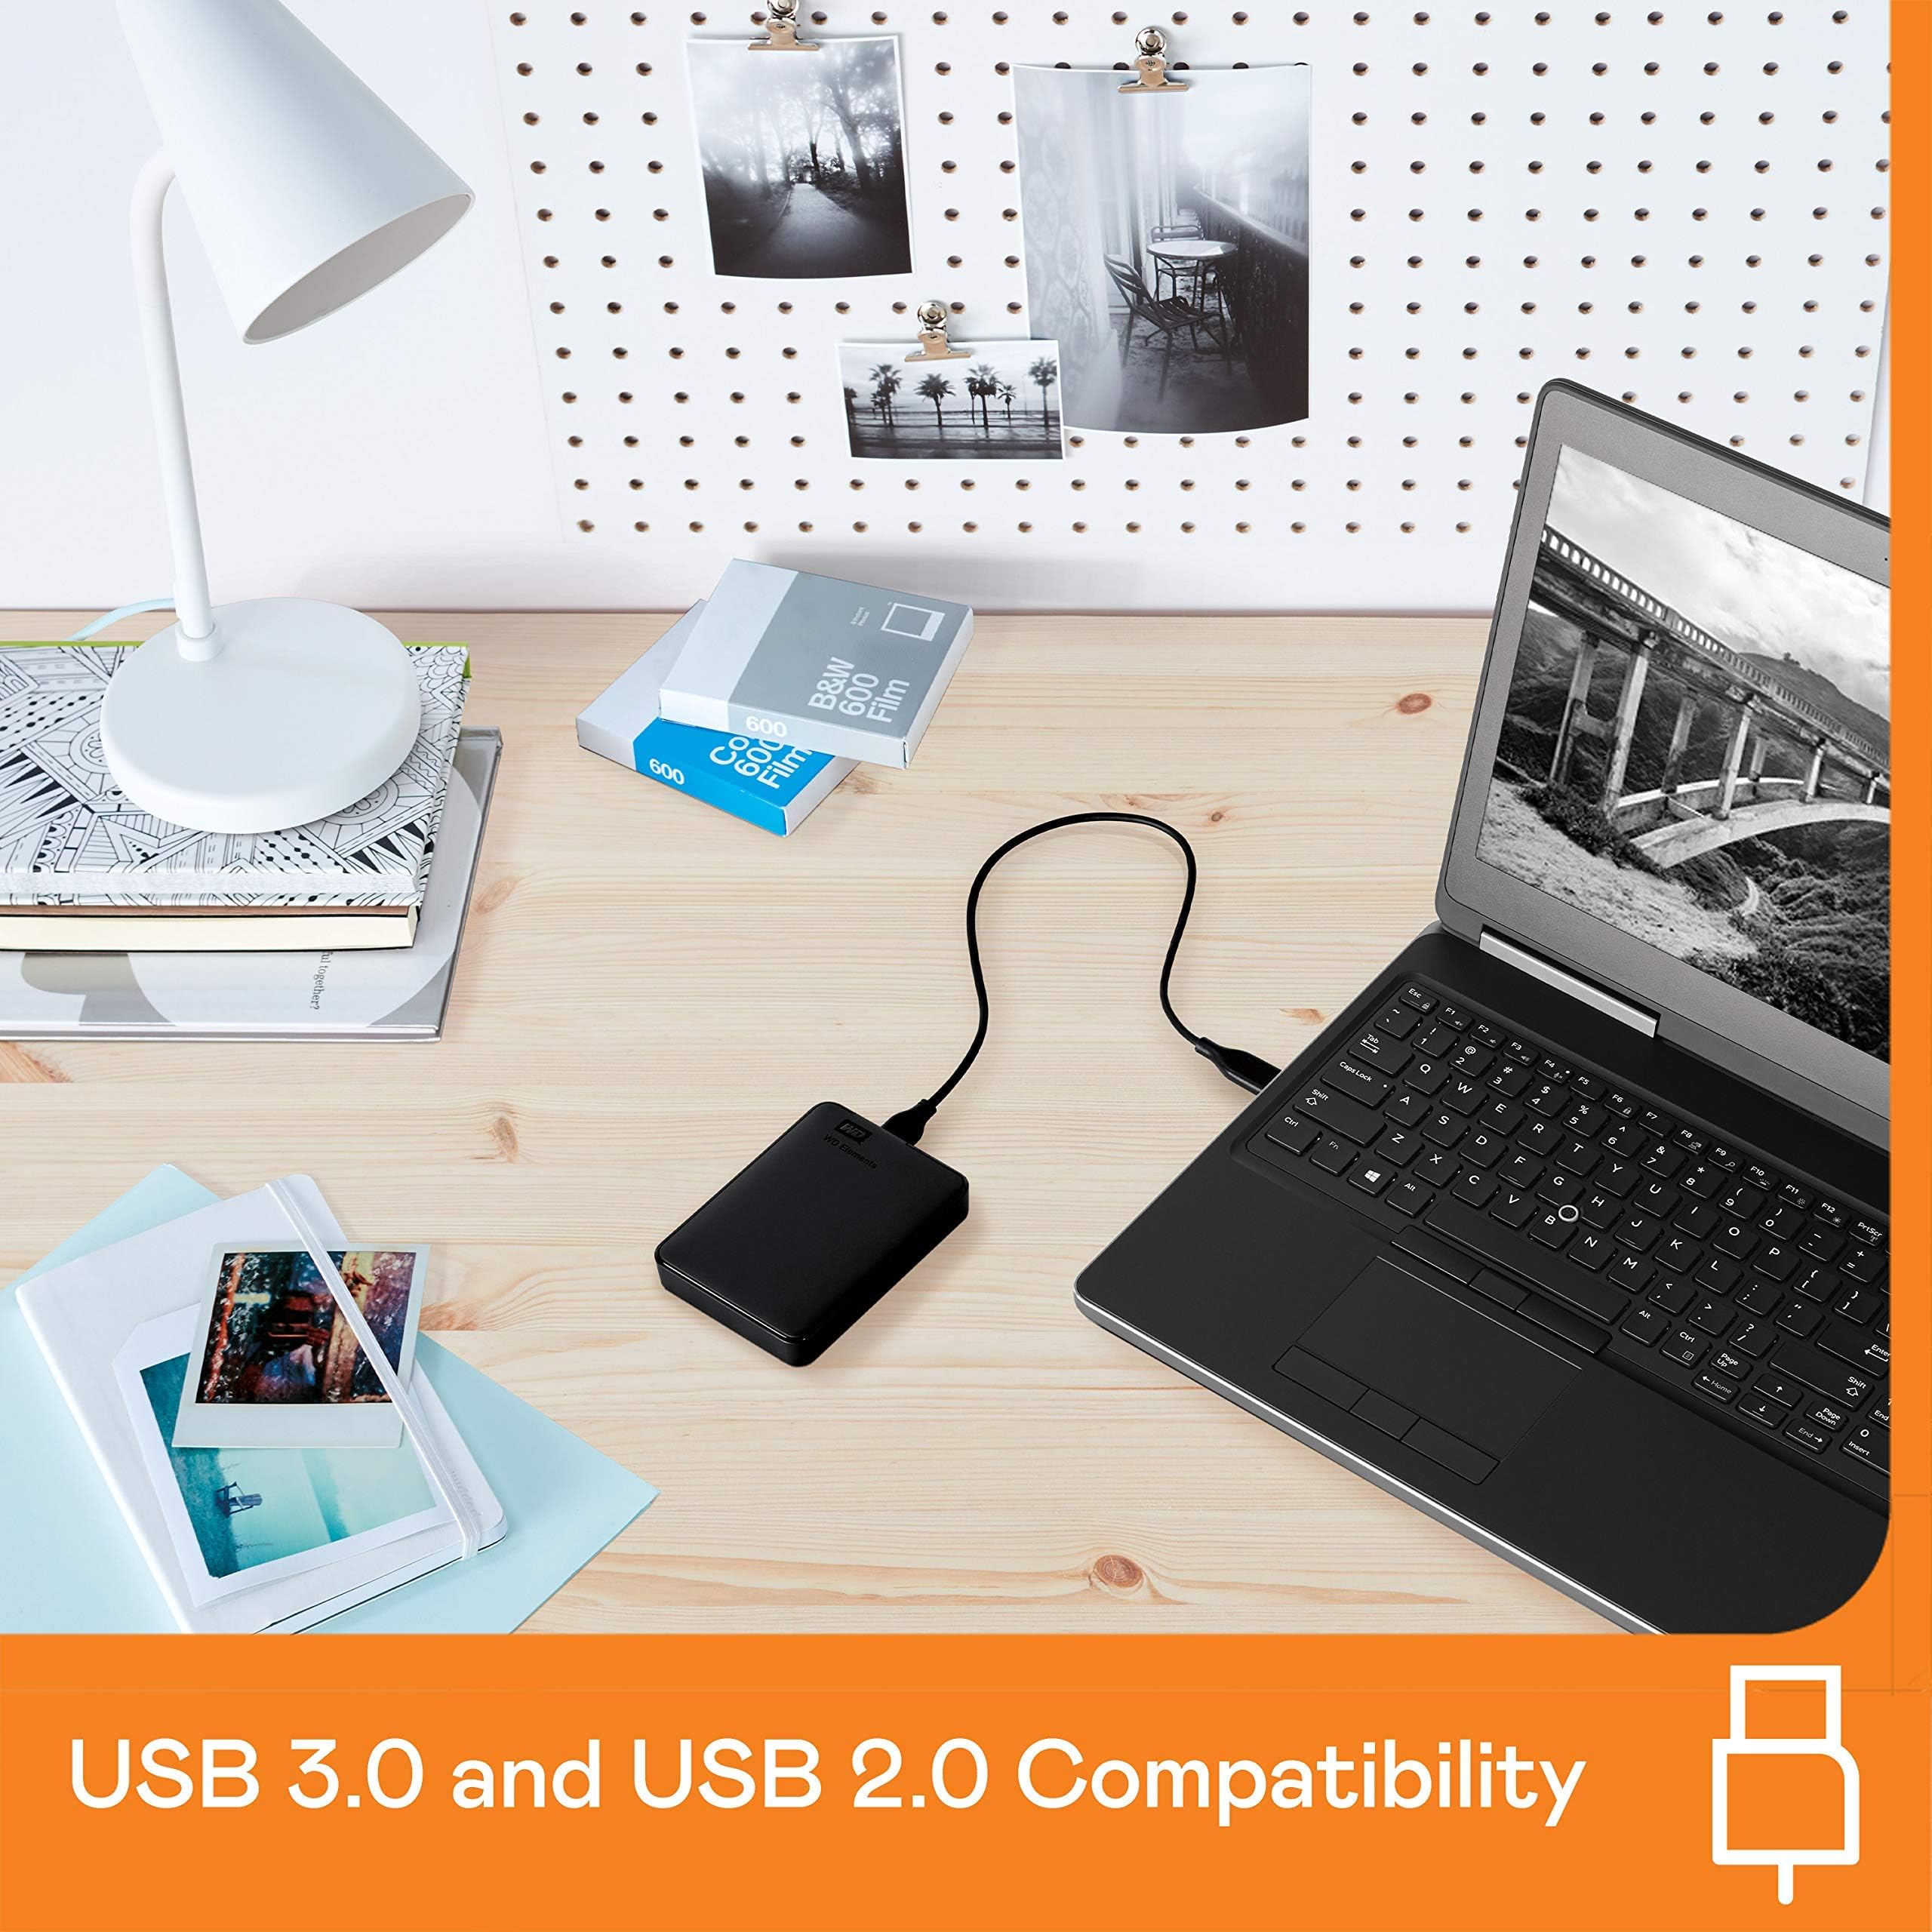 WD 1TB Elements Portable HDD, External Hard Drive, USB 3.0 WDBUZG0010BBK-WESN, Black (Open Box, Like New)